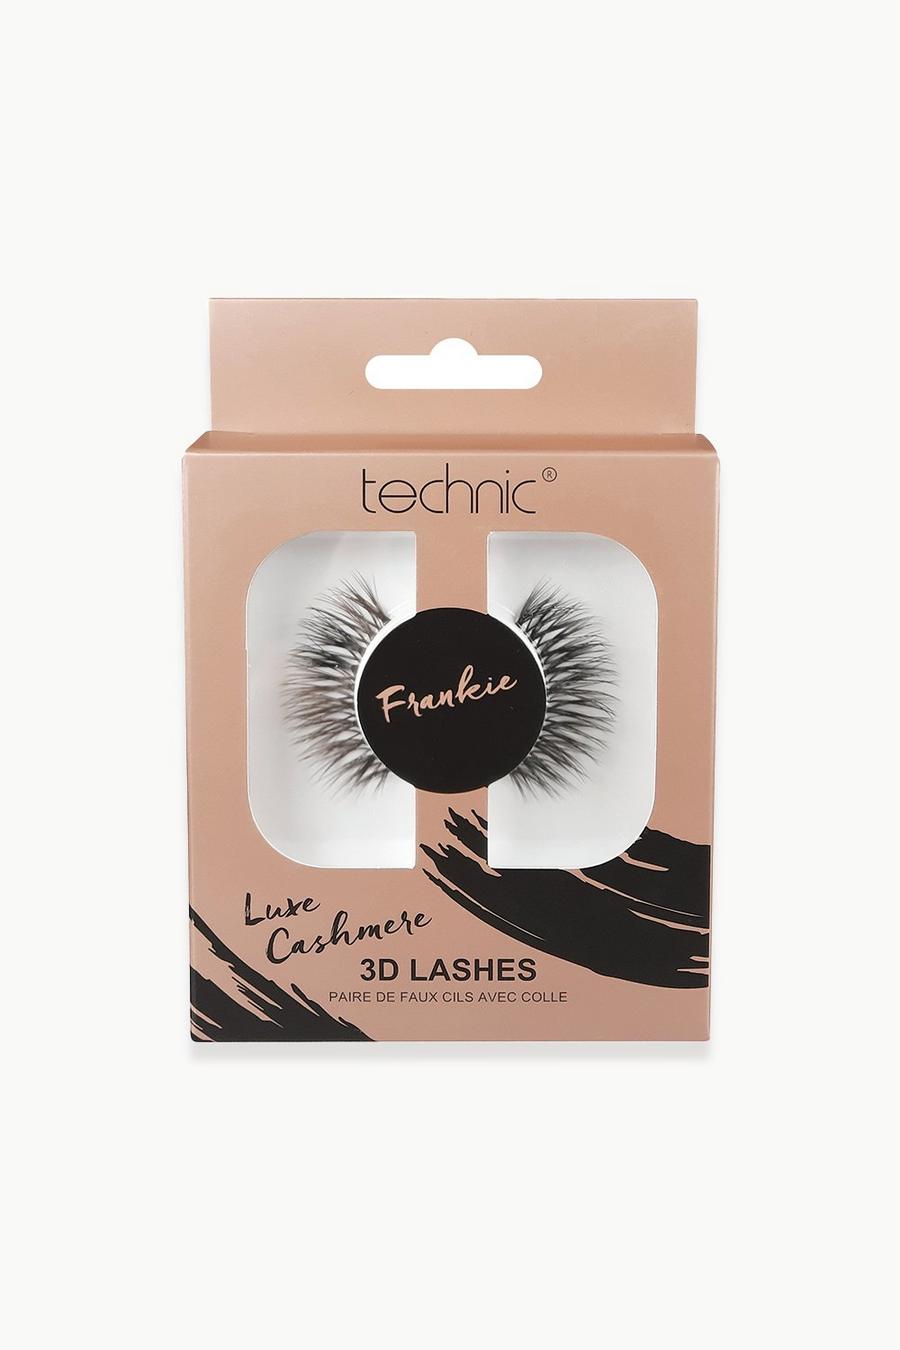 Technic - Faux cils Luxe Cashmere - Frankie, Black image number 1